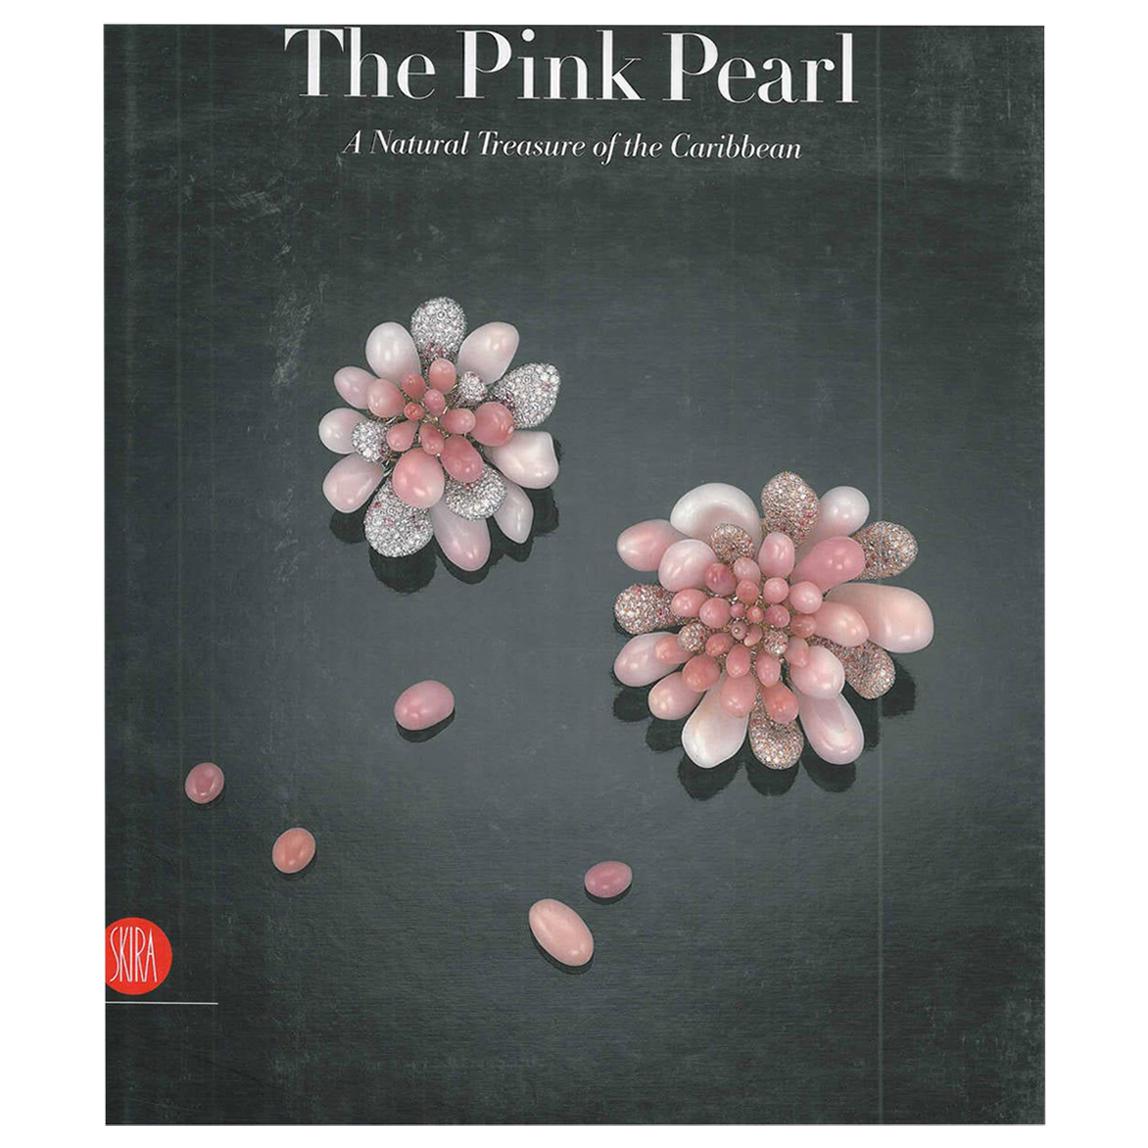 Book of The Pink Pearl, LA PERLE ROSE 'Tresor natural des Caraibes'